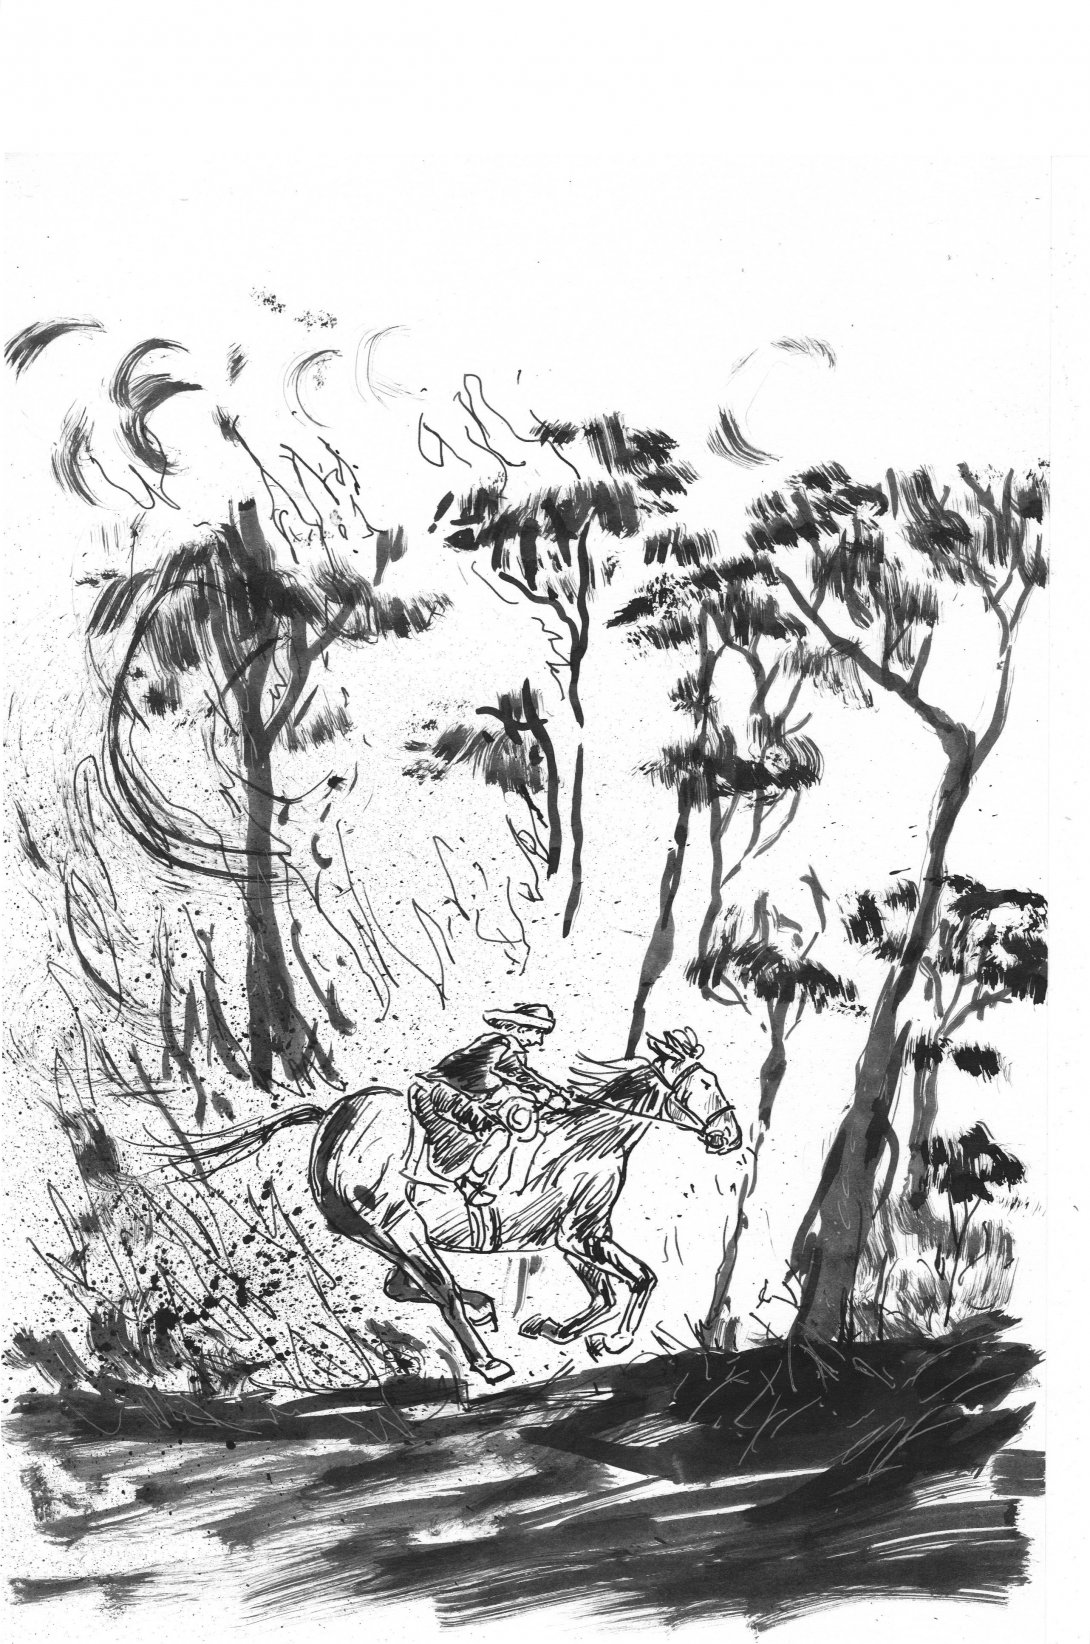 Sketch of boy riding a horse through a forrest fire